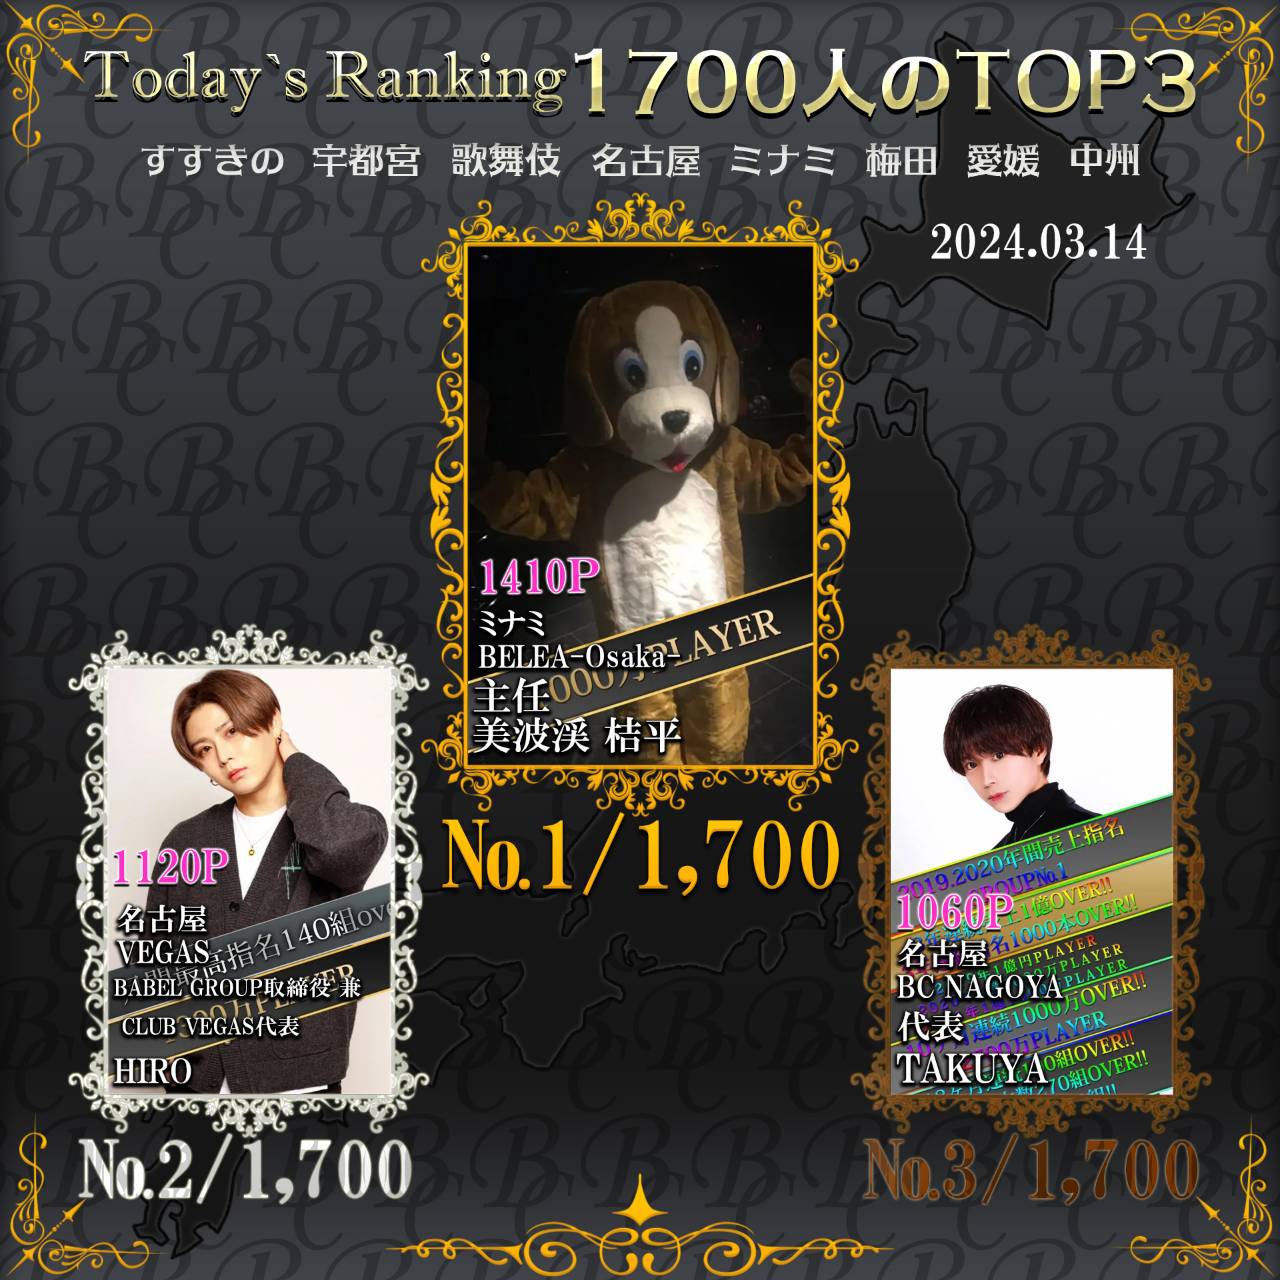 3/14 Today’s Ranking